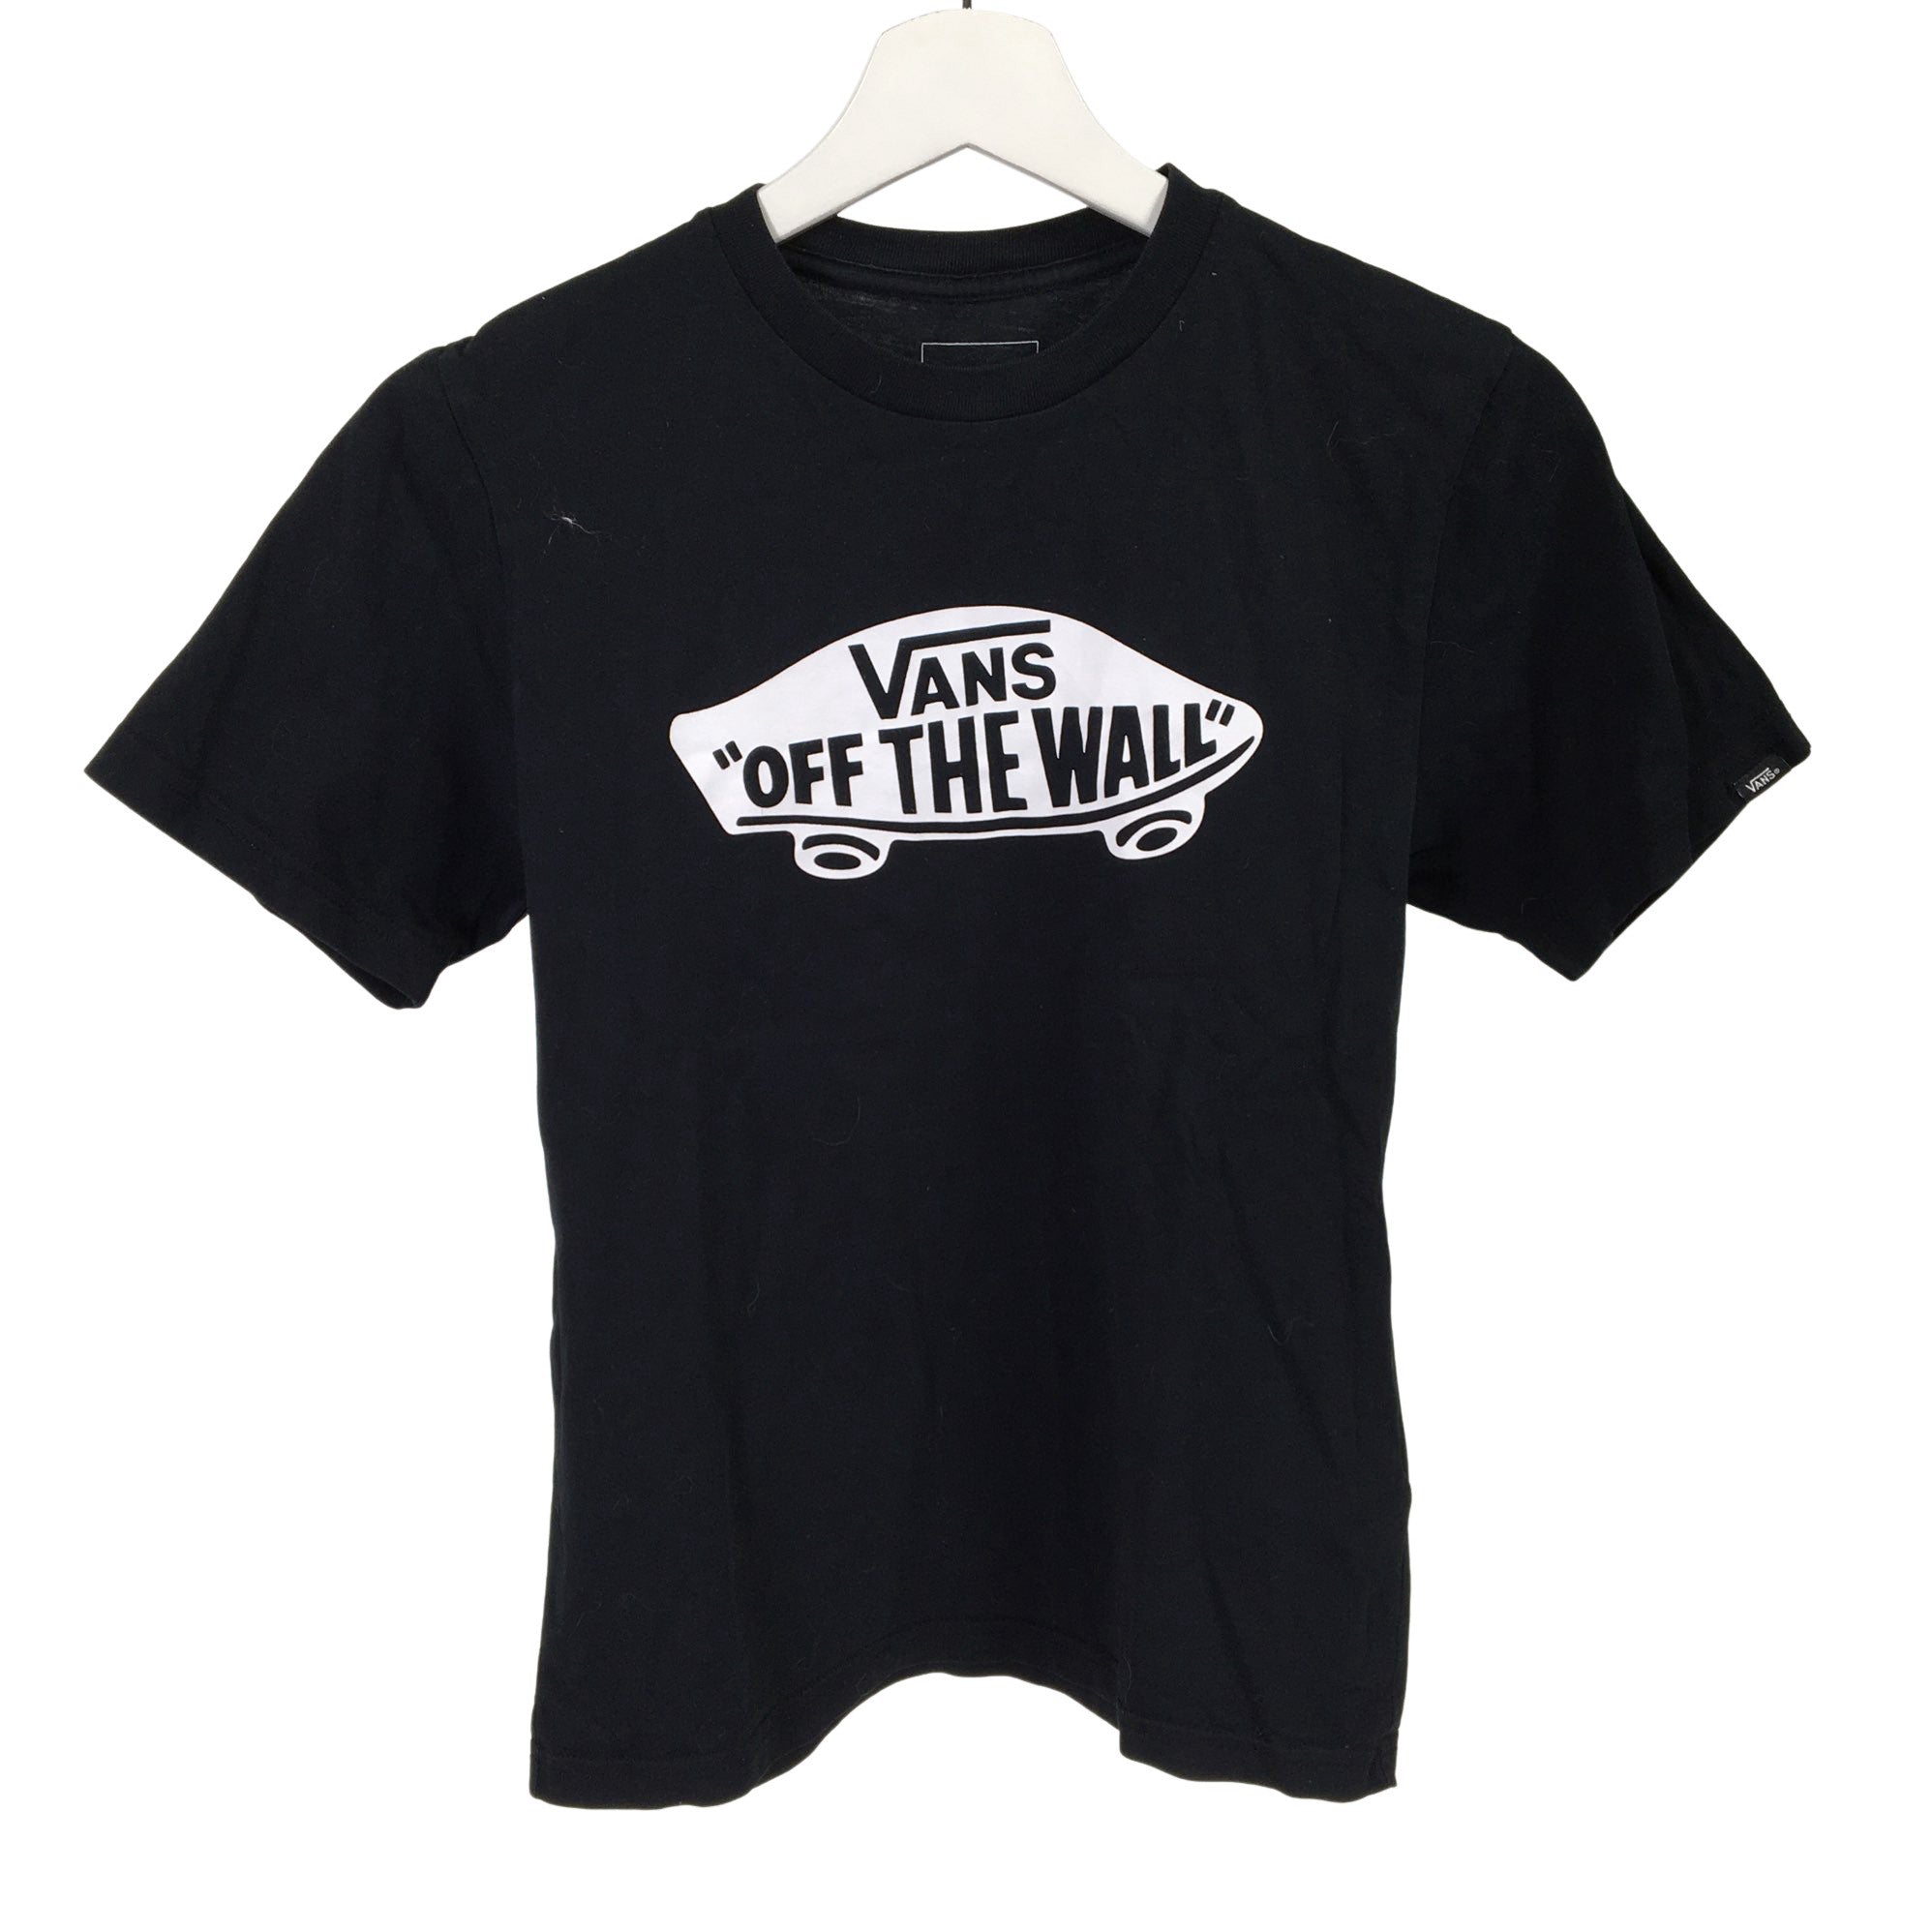 Unisex Vans T-shirt, size - 152 (Black) Emmy